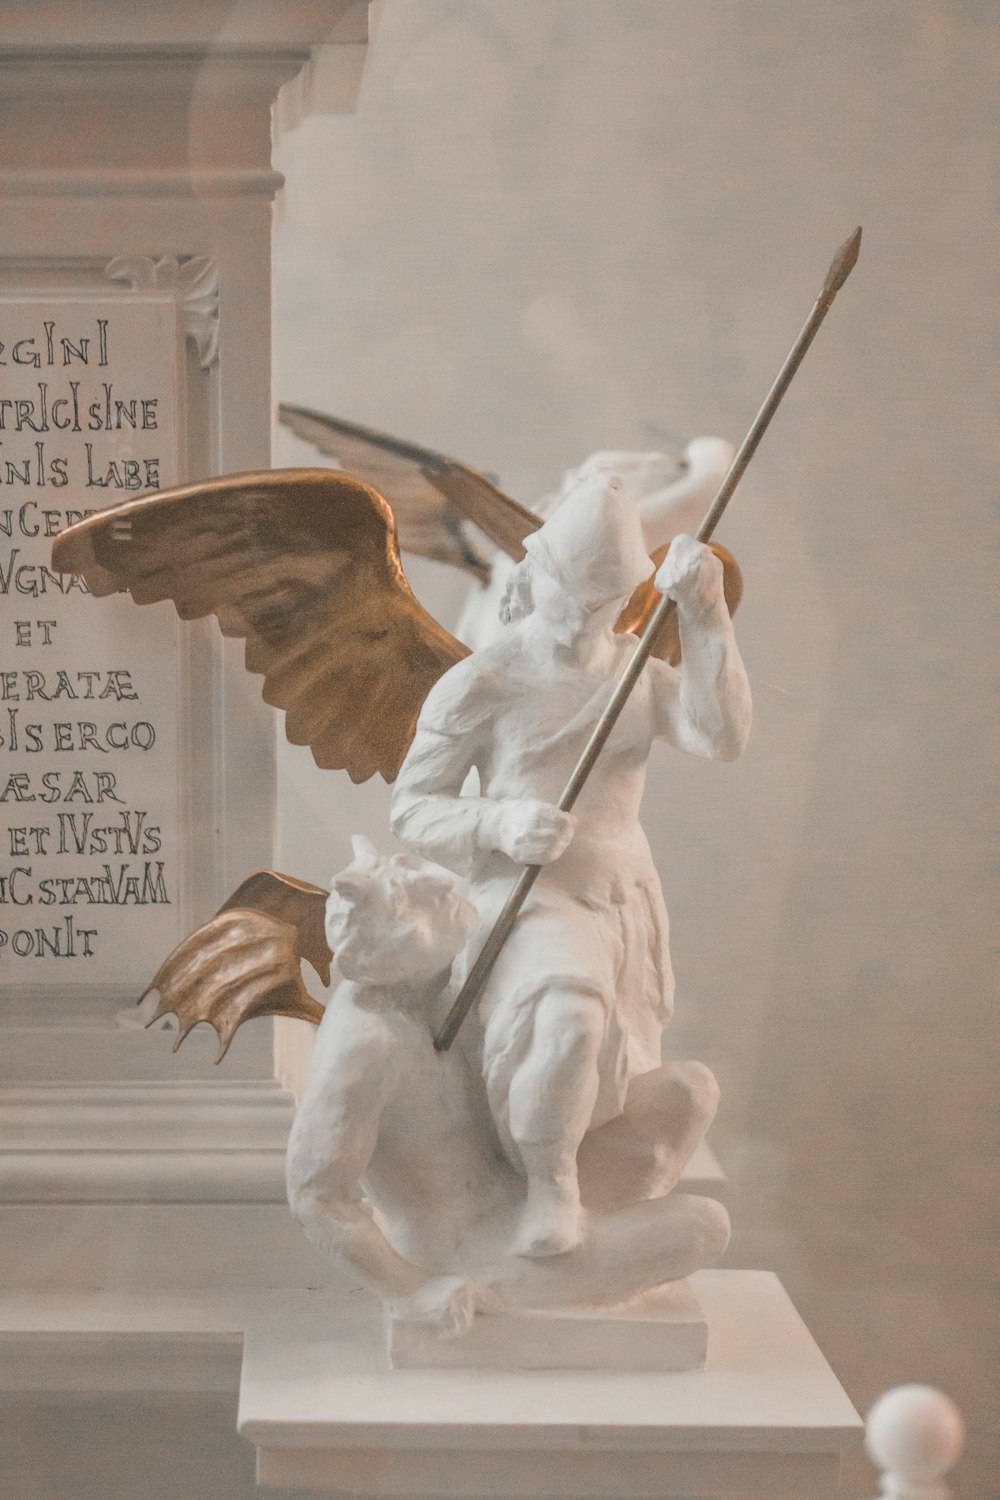 Engel hält Stock Statue mit Zitat